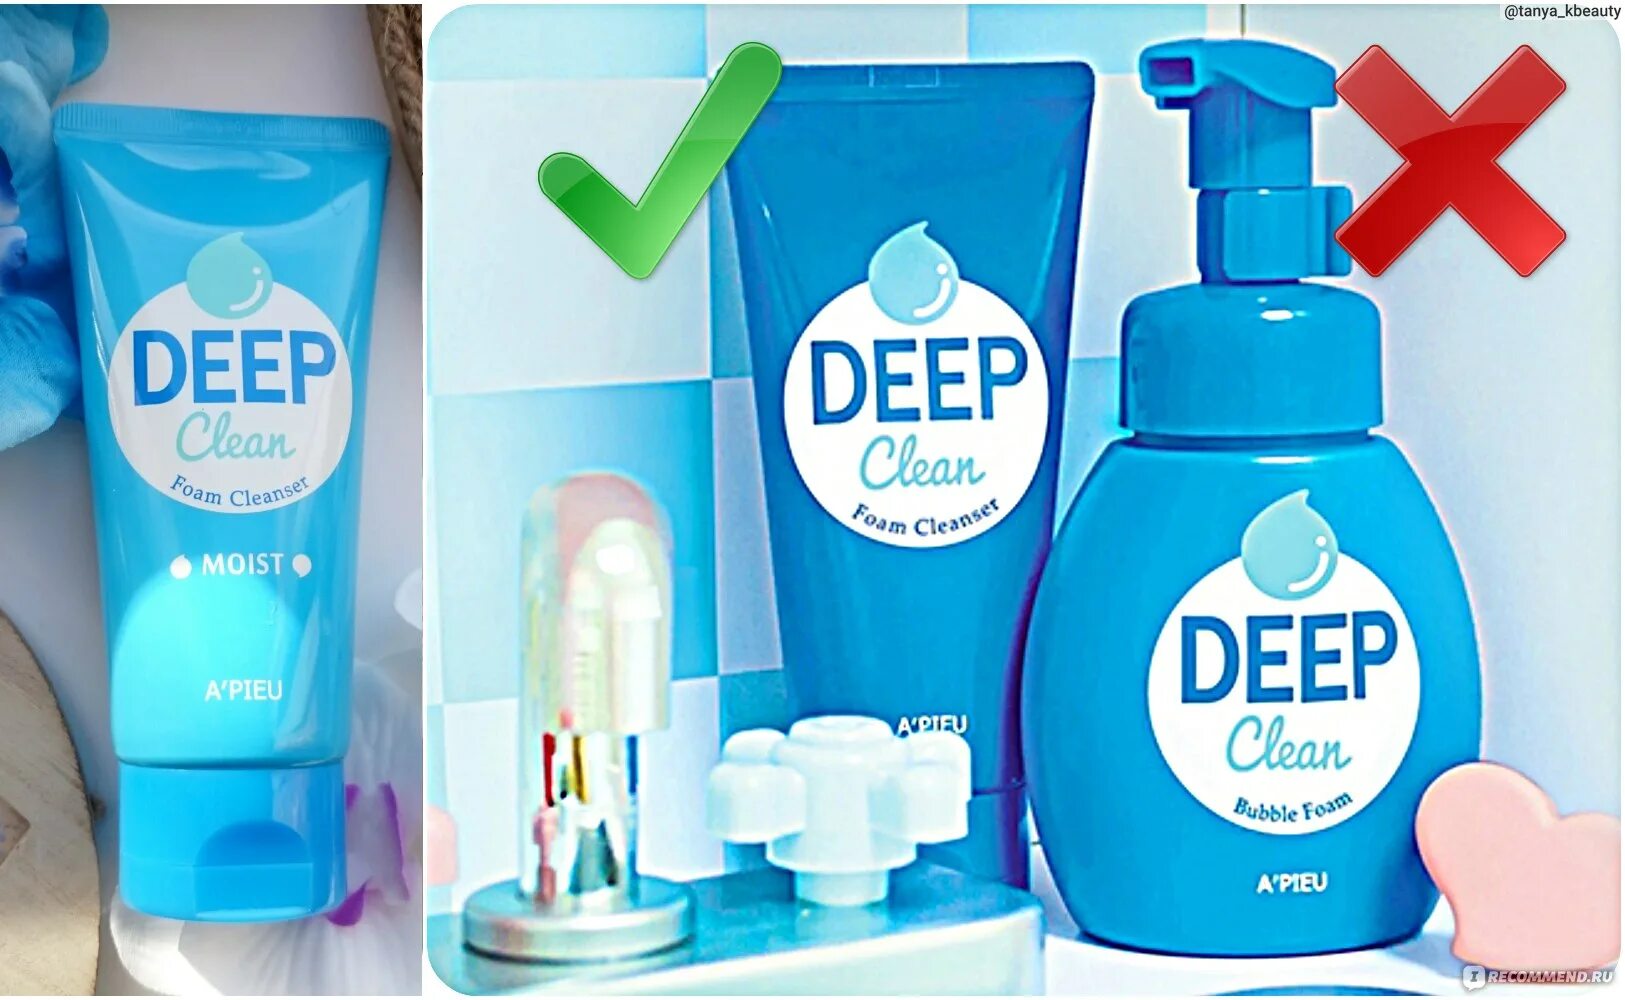 D cleanser. Корейская пенка Deep clean. Deep clean Foam Cleanser пенка для умывания. Банановая пенка для умывания. Корейская система 424.